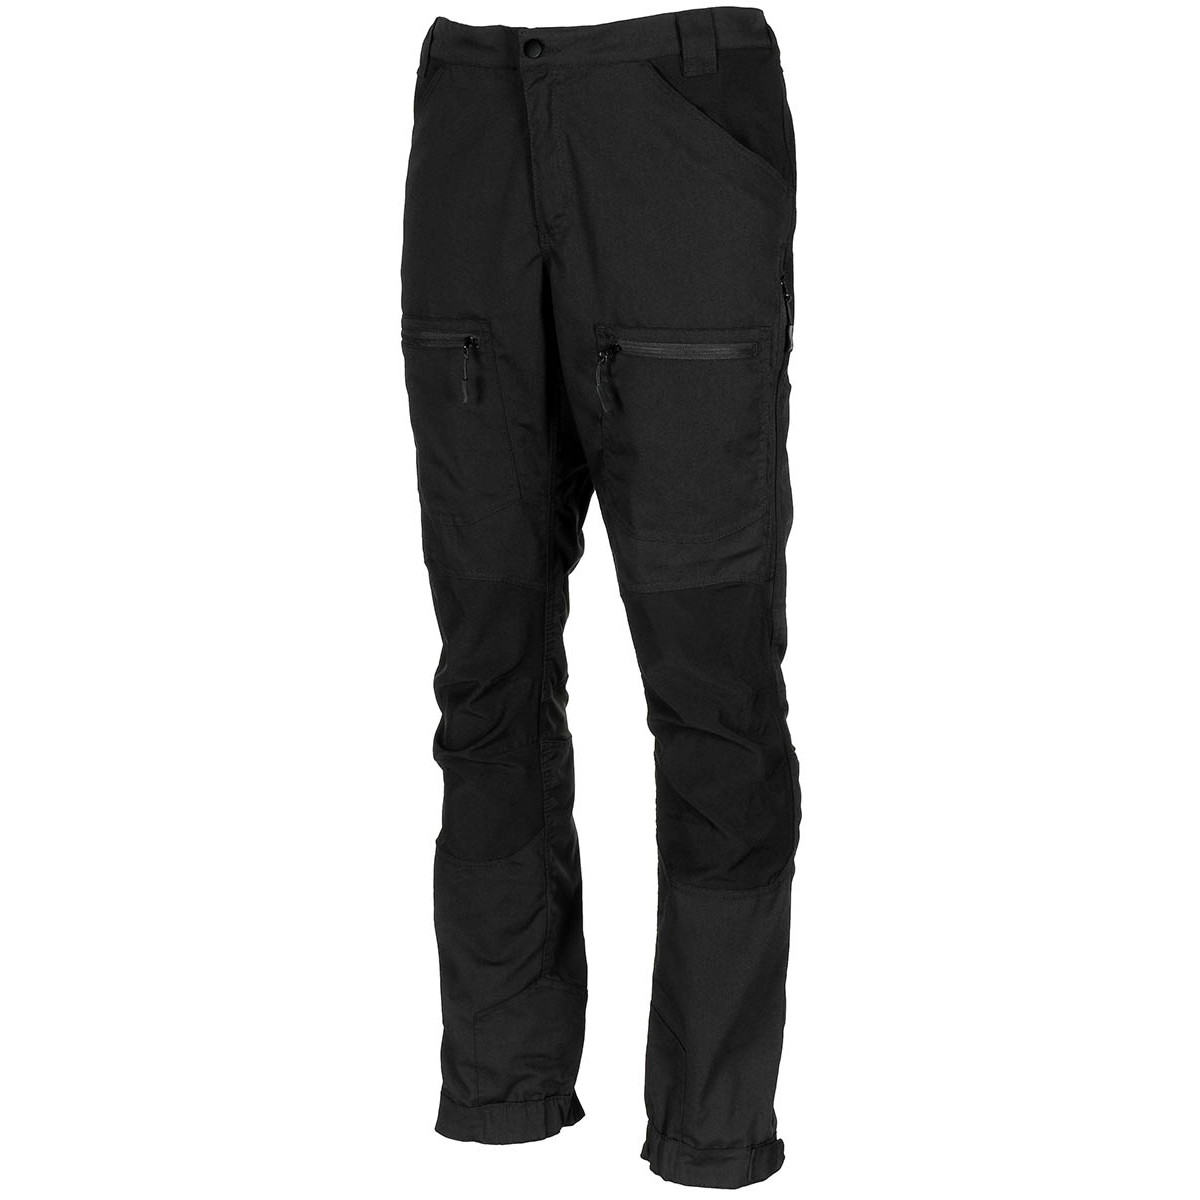 Kalhoty trekingové Fox Expedition - černé, L